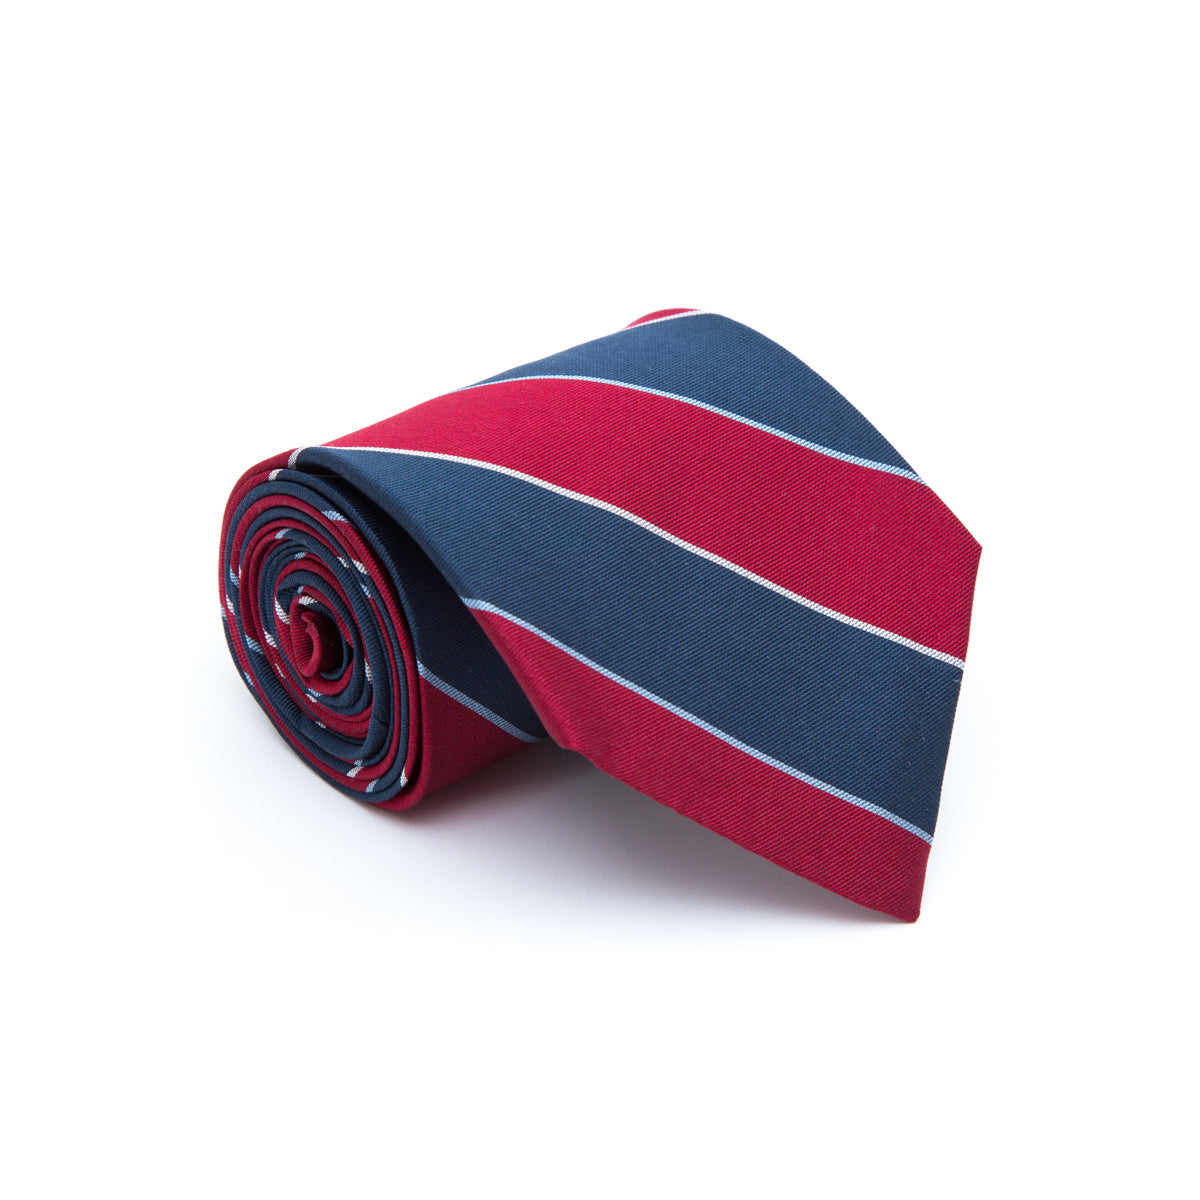 Two-tone striped tie